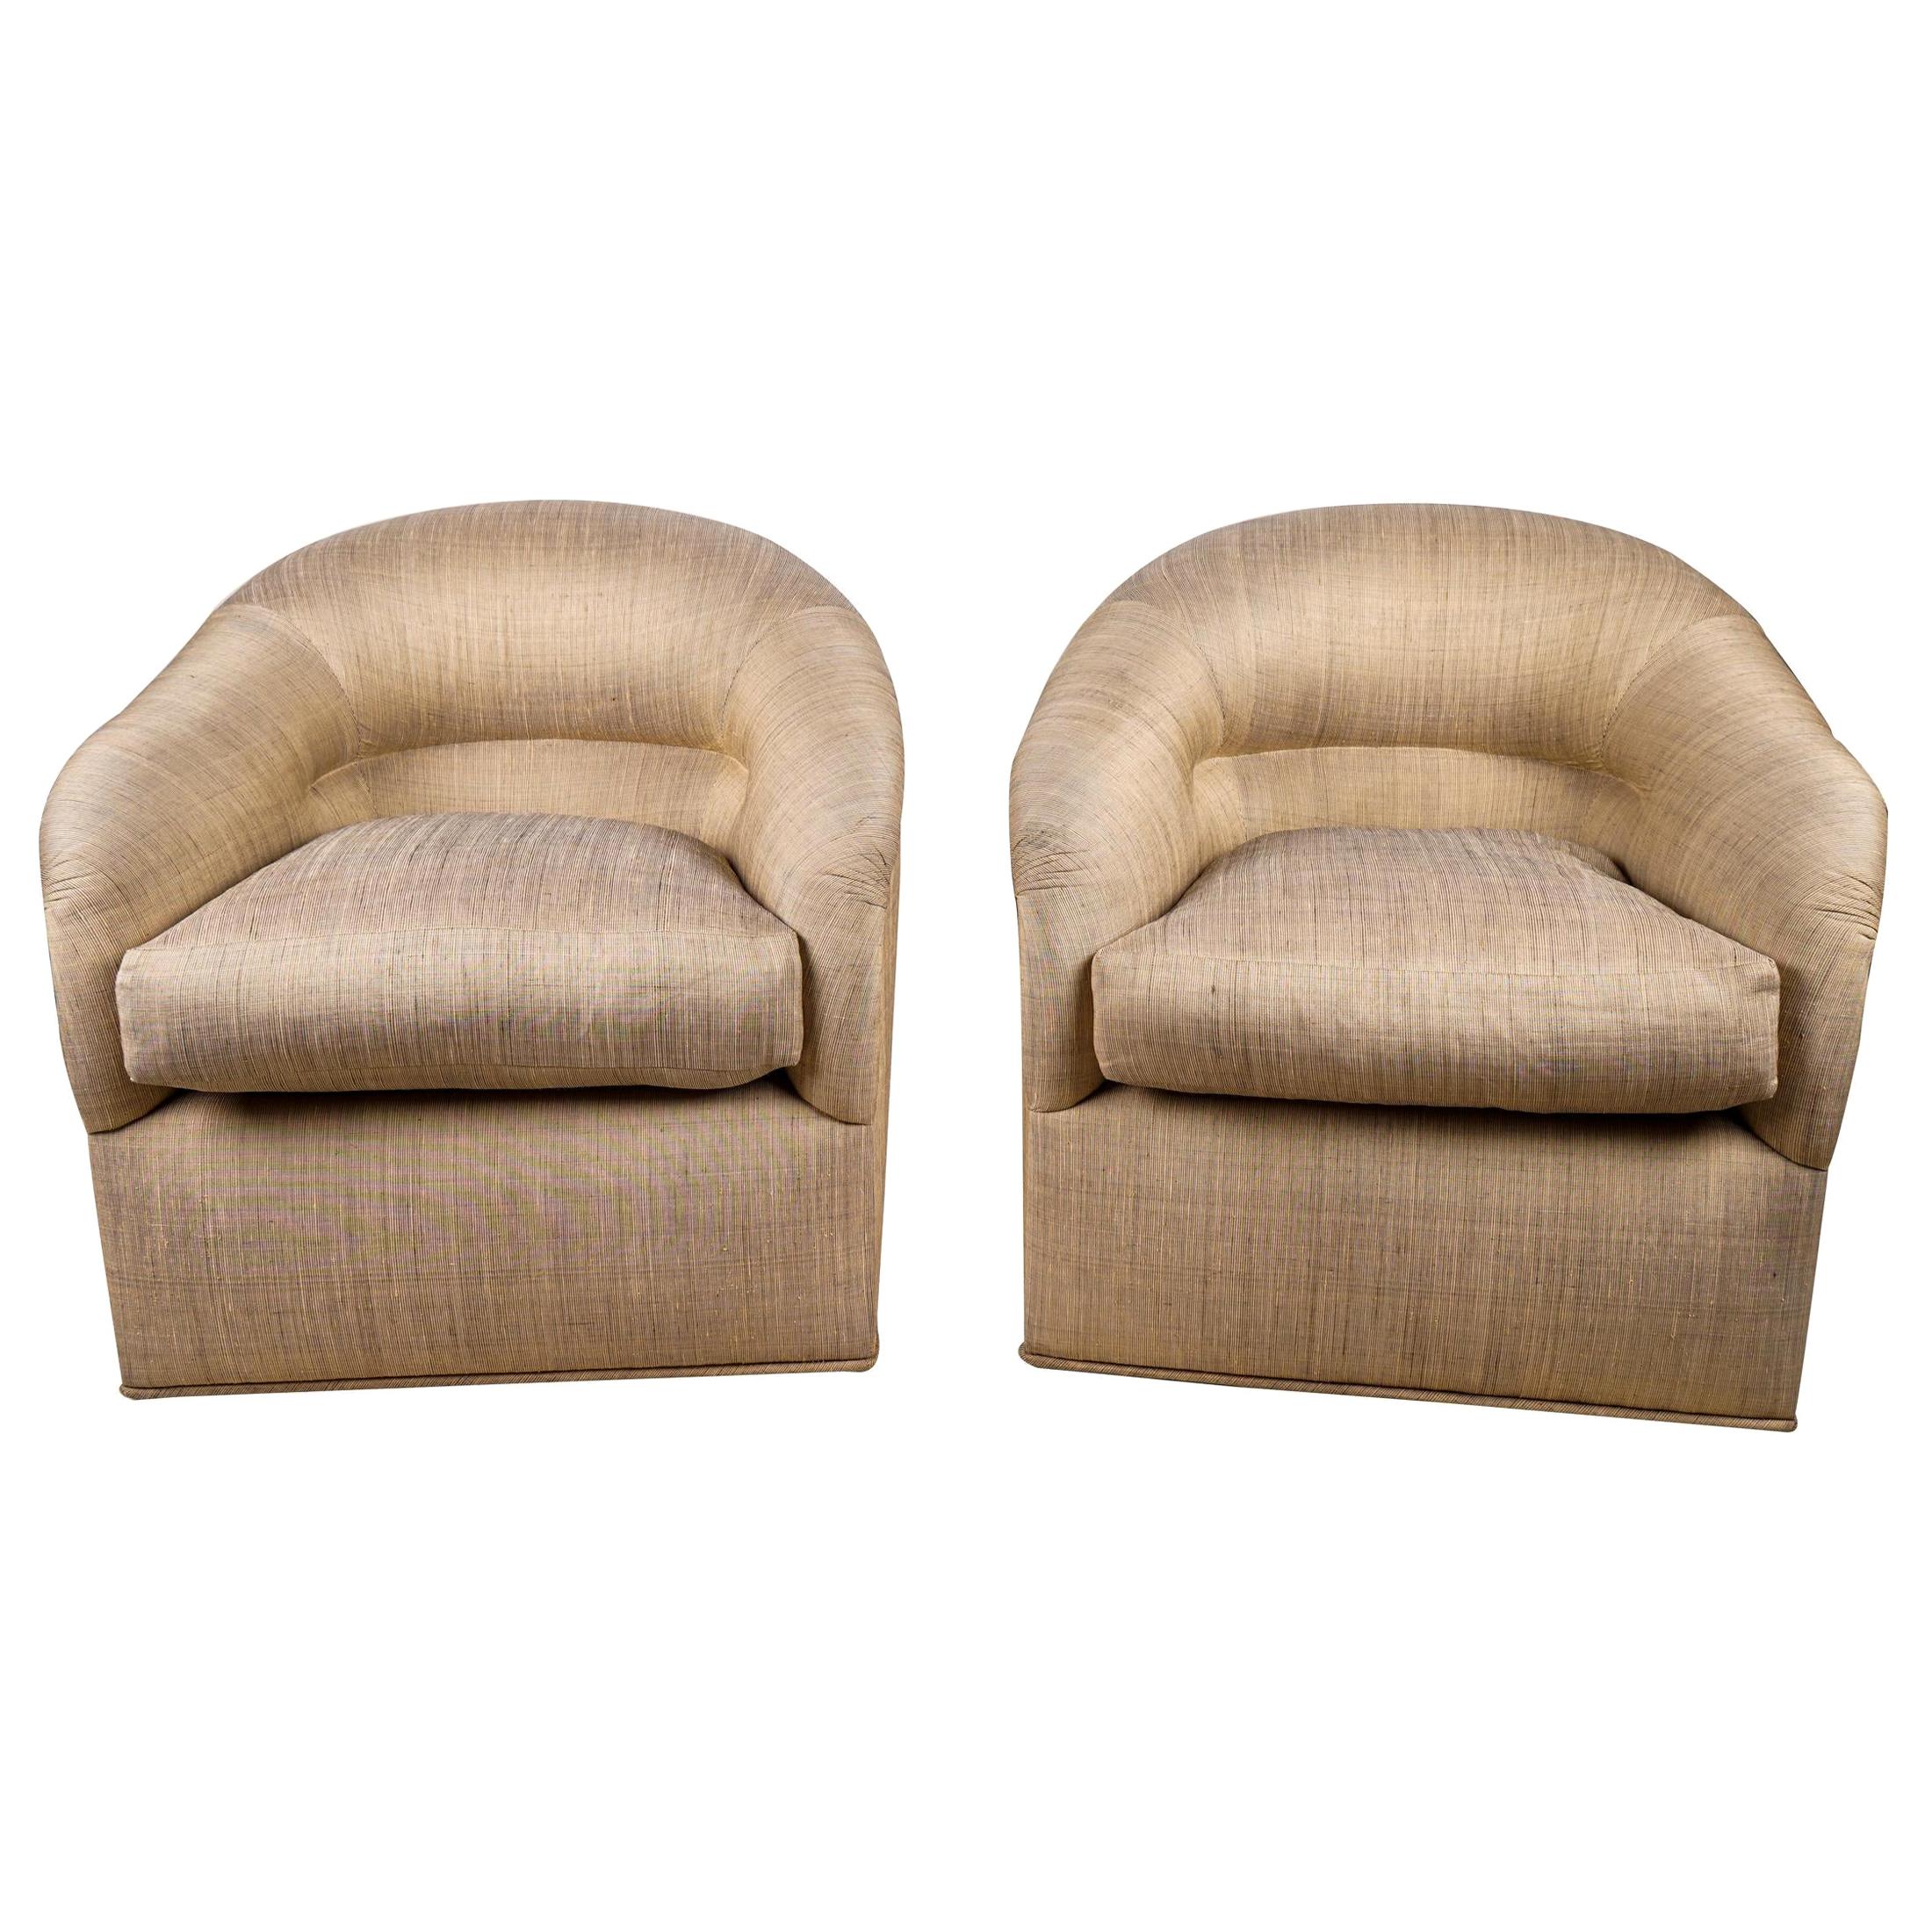 Pair of Opulent J. Robert Scott Upholstered Club Chairs